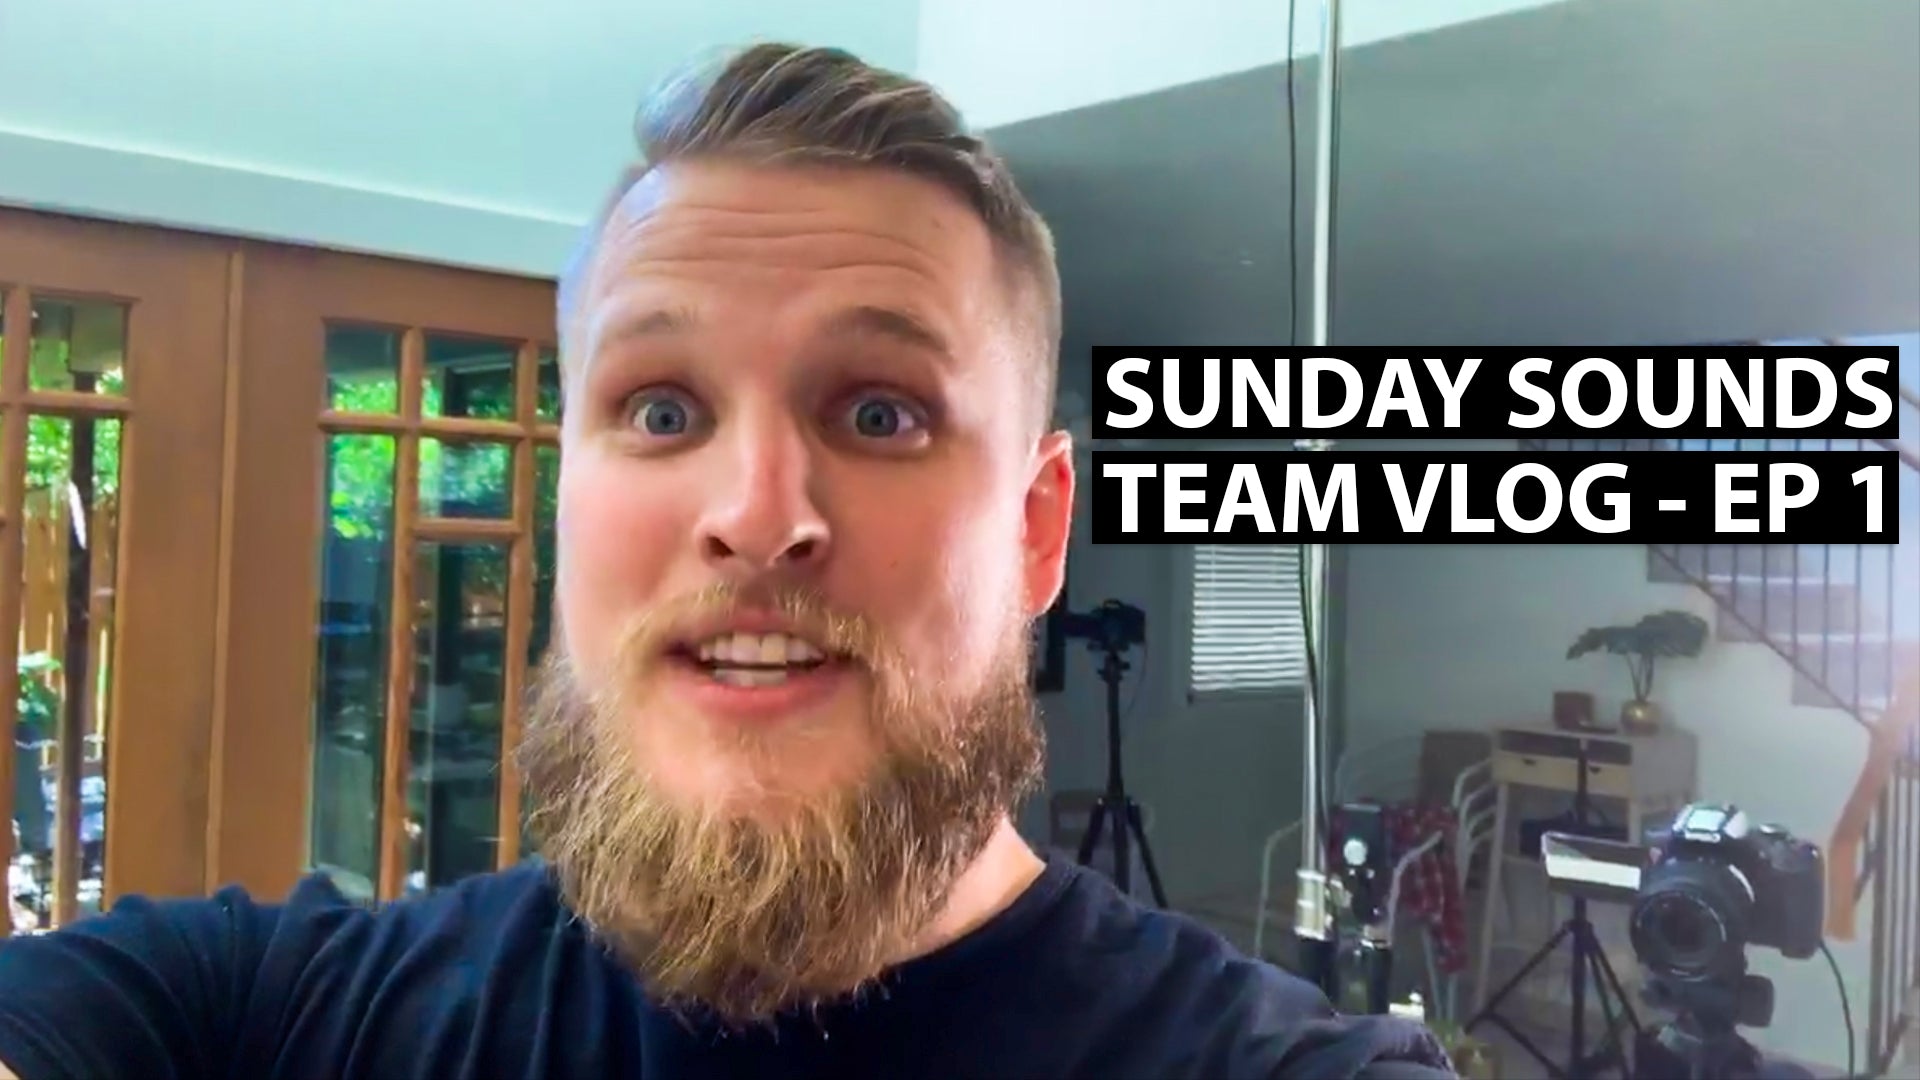 The Sunday Sounds Team Vlog: Episode 1